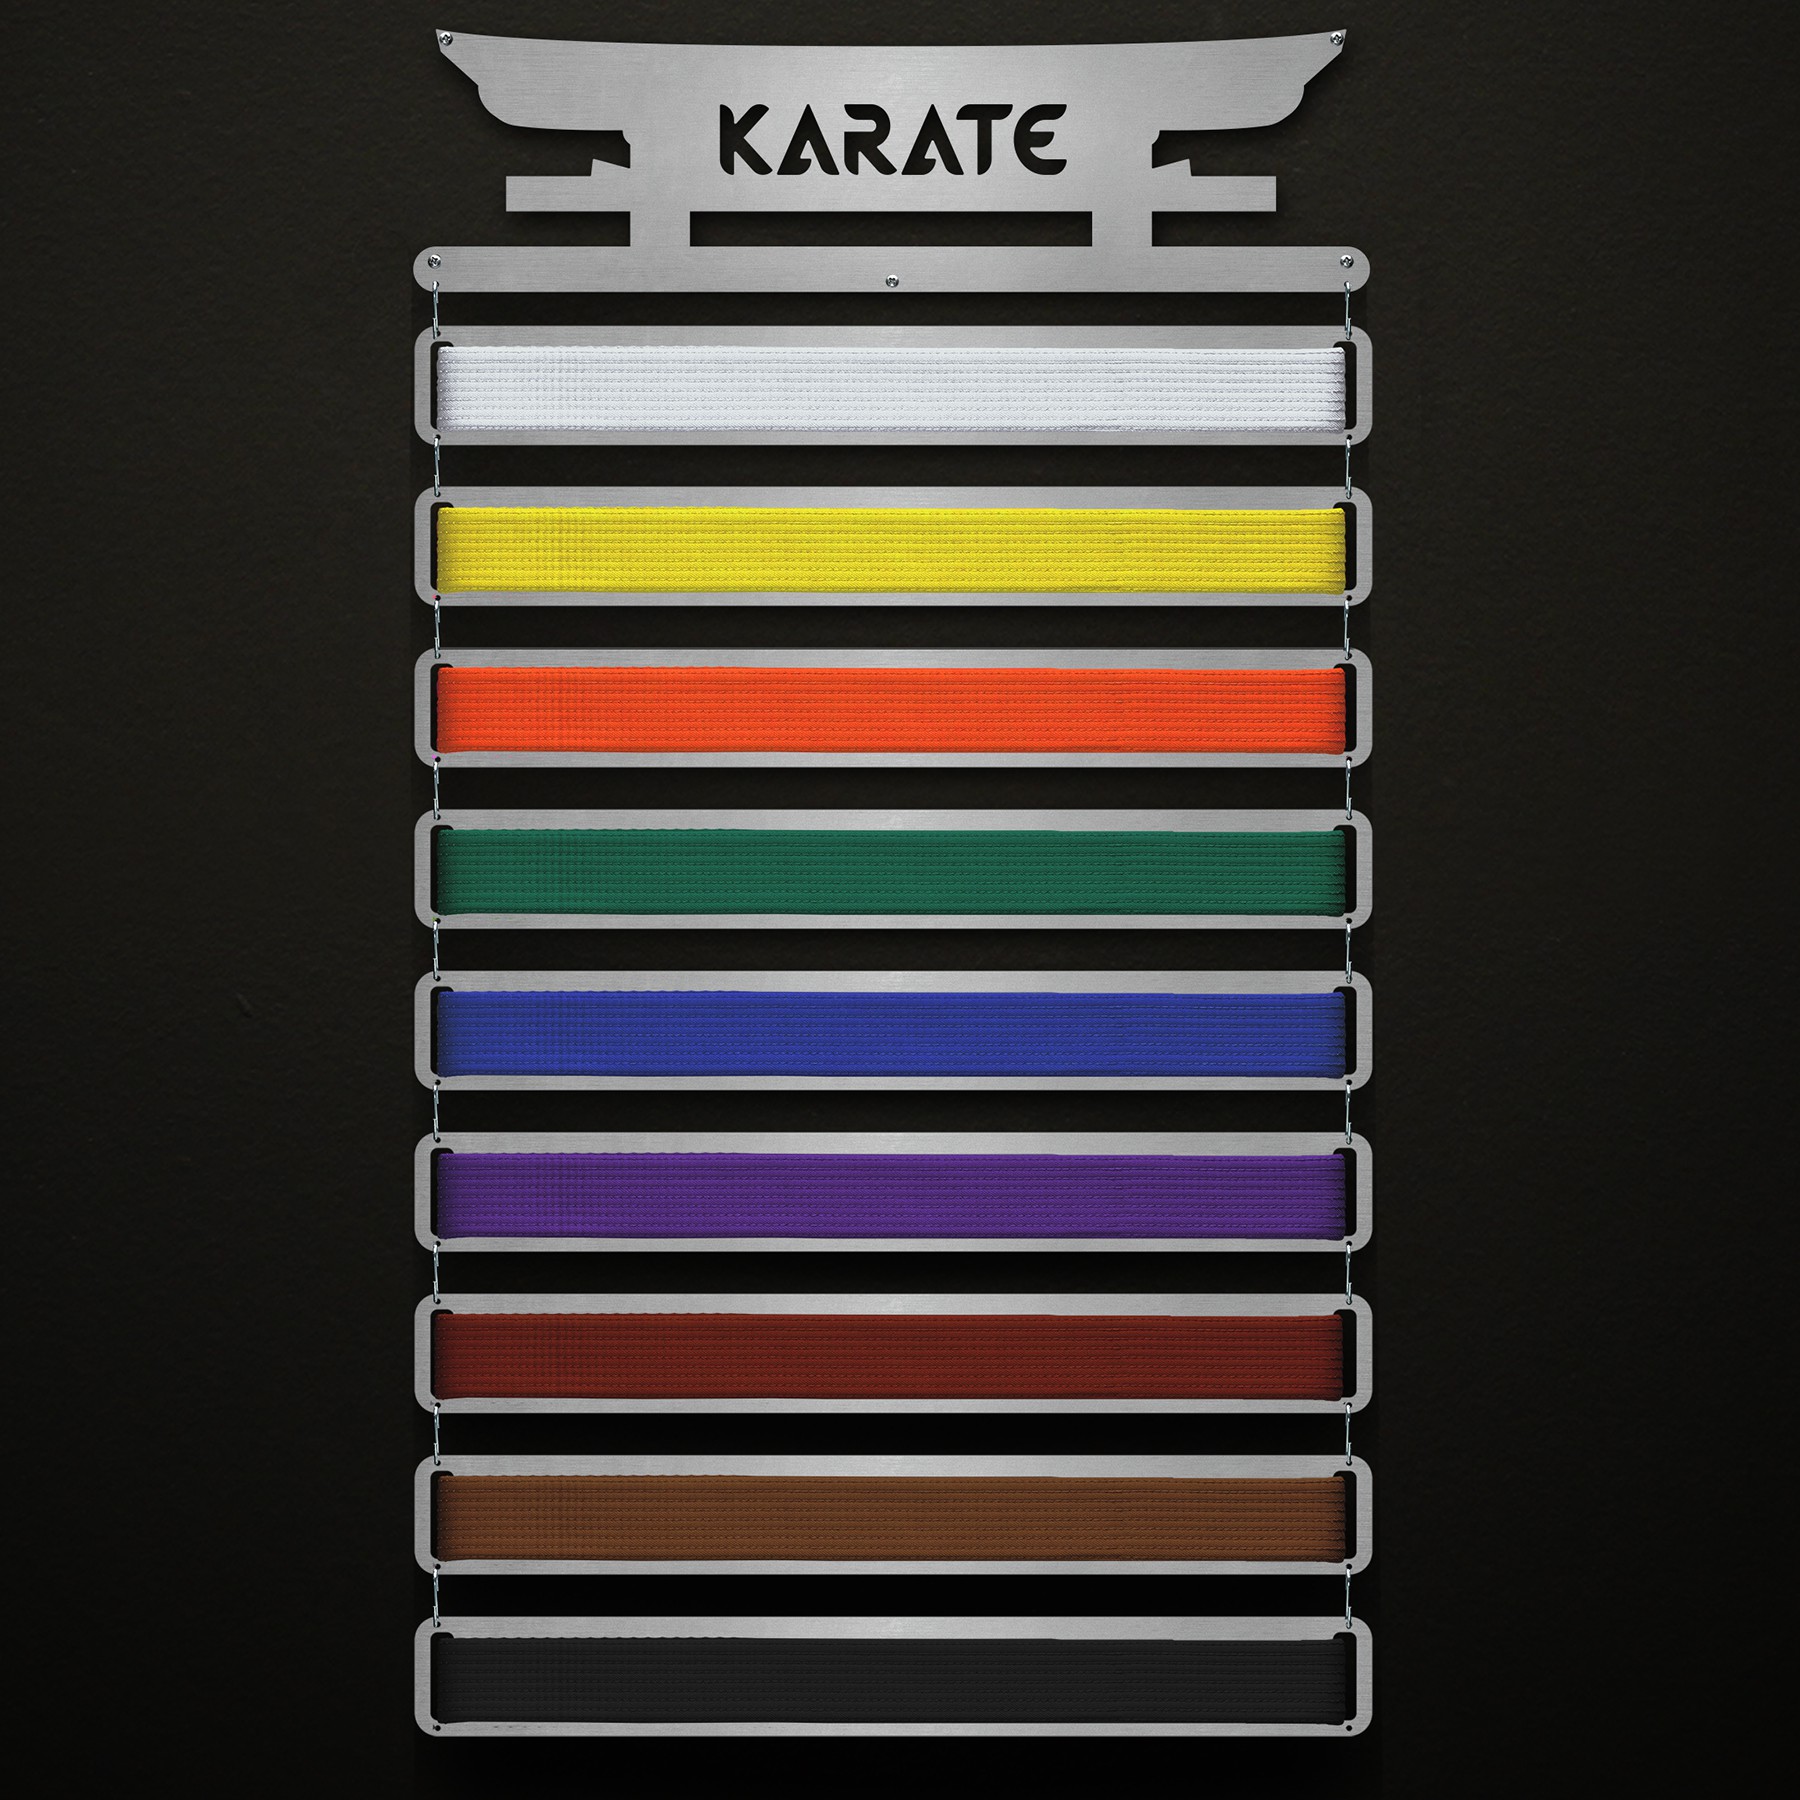 karate belts meaning